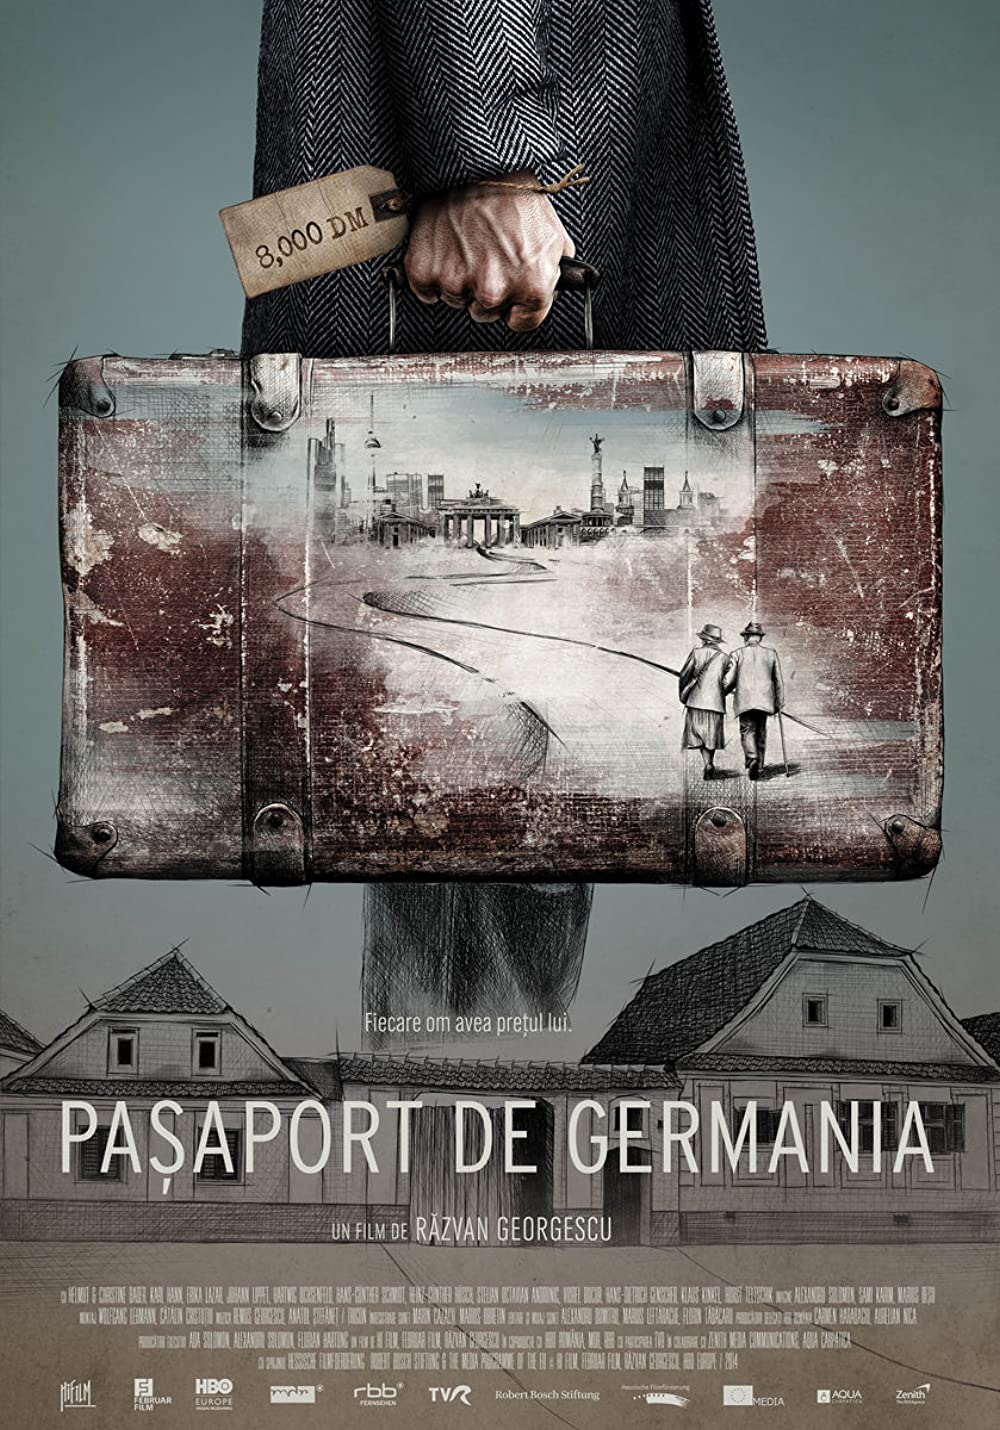 Trading Germans/Pasaport de Germania